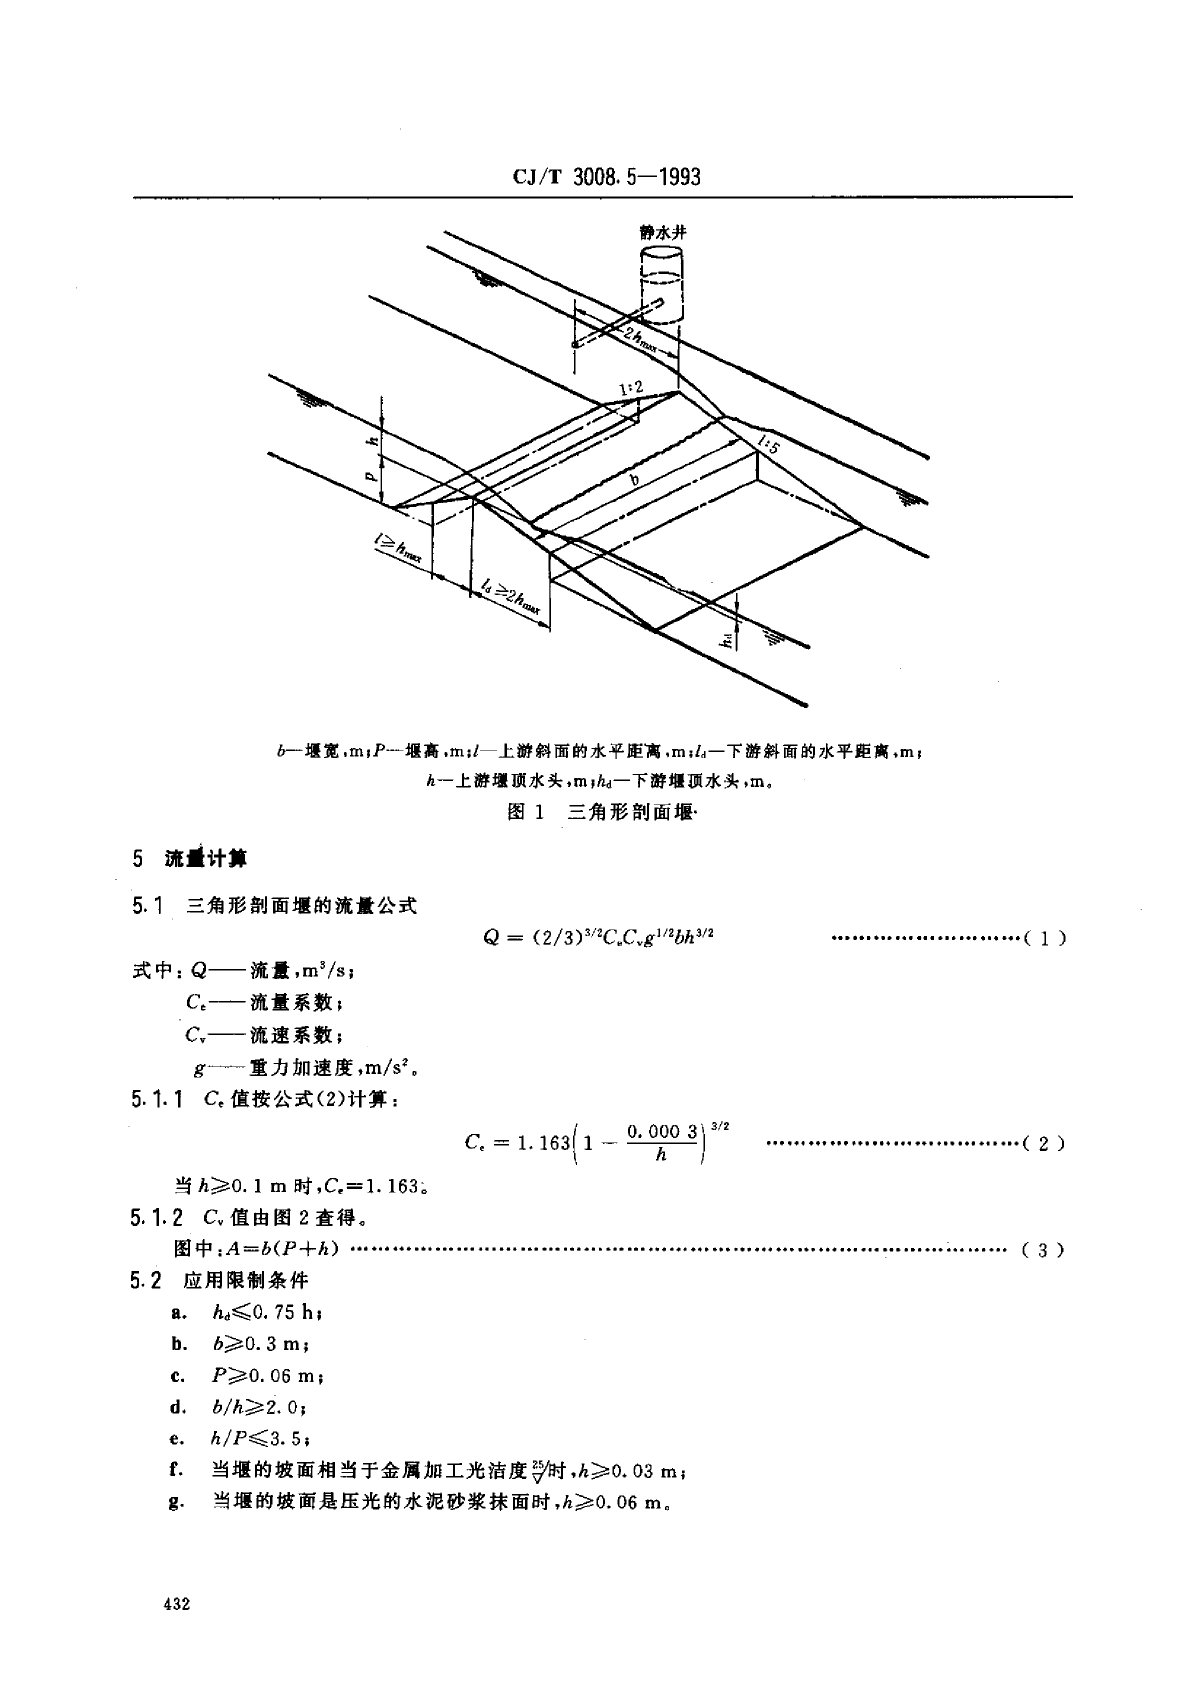 CJT 3008.5-1993 城市排水流量堰槽测量标准三角形剖面堰-图二